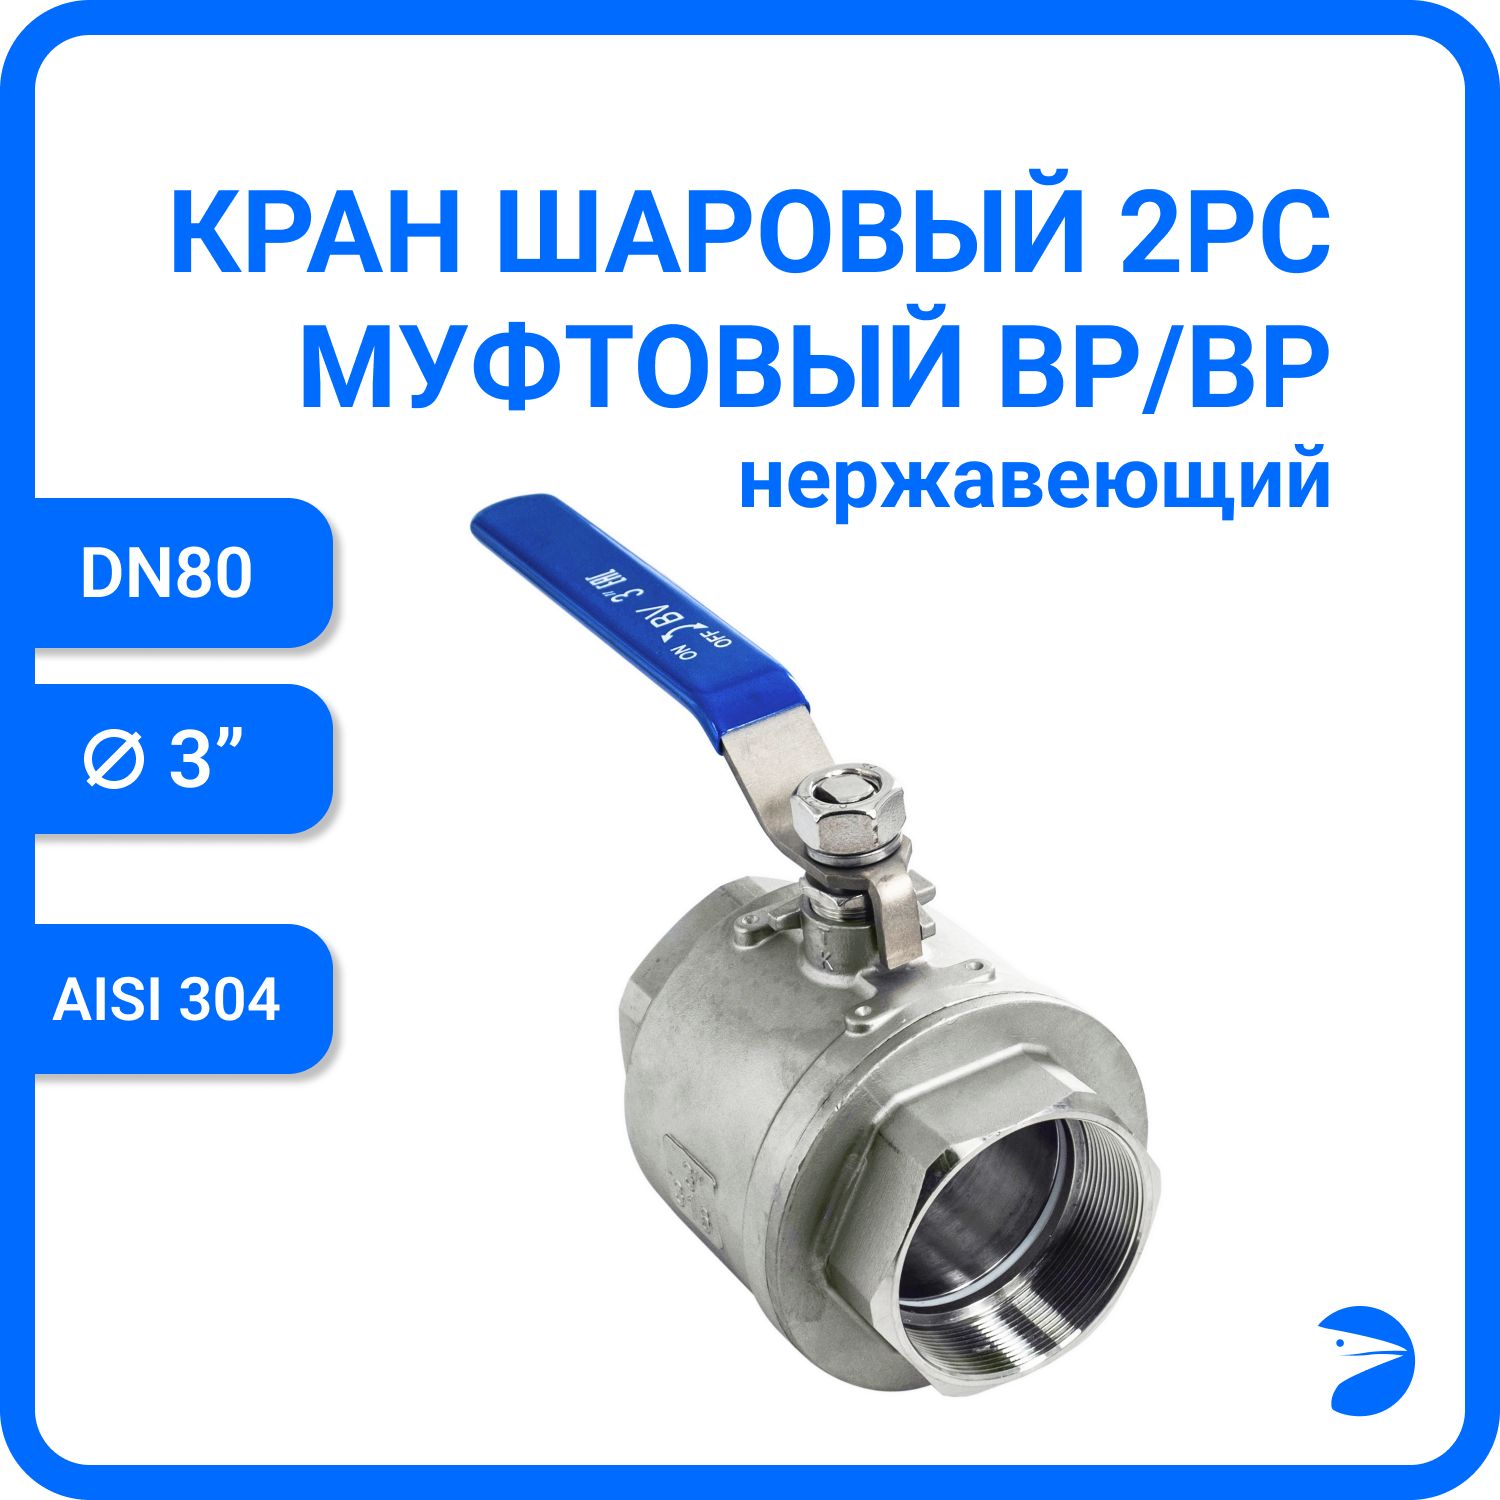 Кран шаровый Newkey муфтовый нержавеющий ВР/ВР (2PC), AISI304 DN80 (3